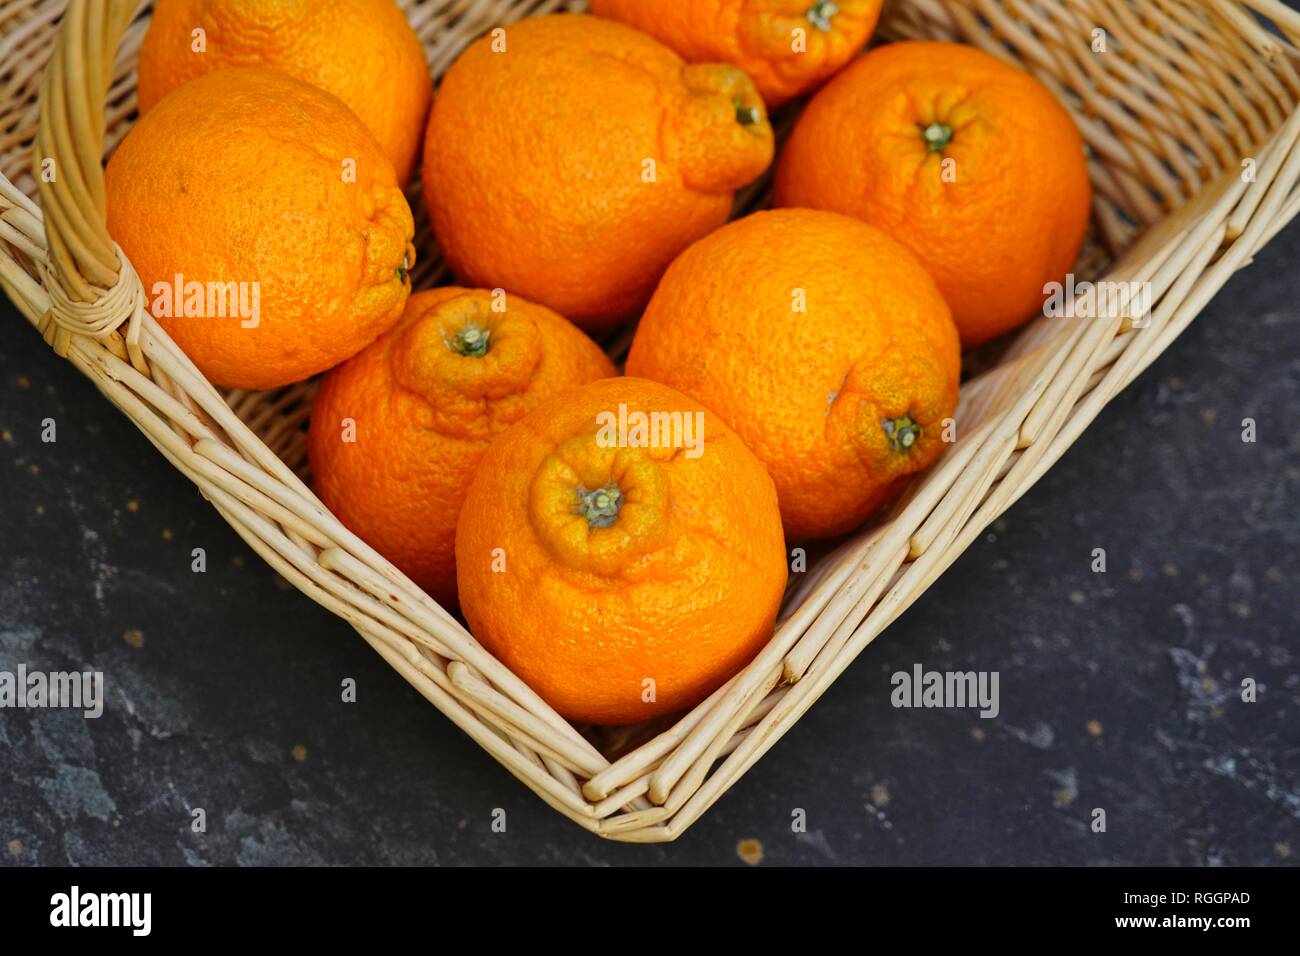 Sumo Oranges Stock Photos - Free & Royalty-Free Stock Photos from